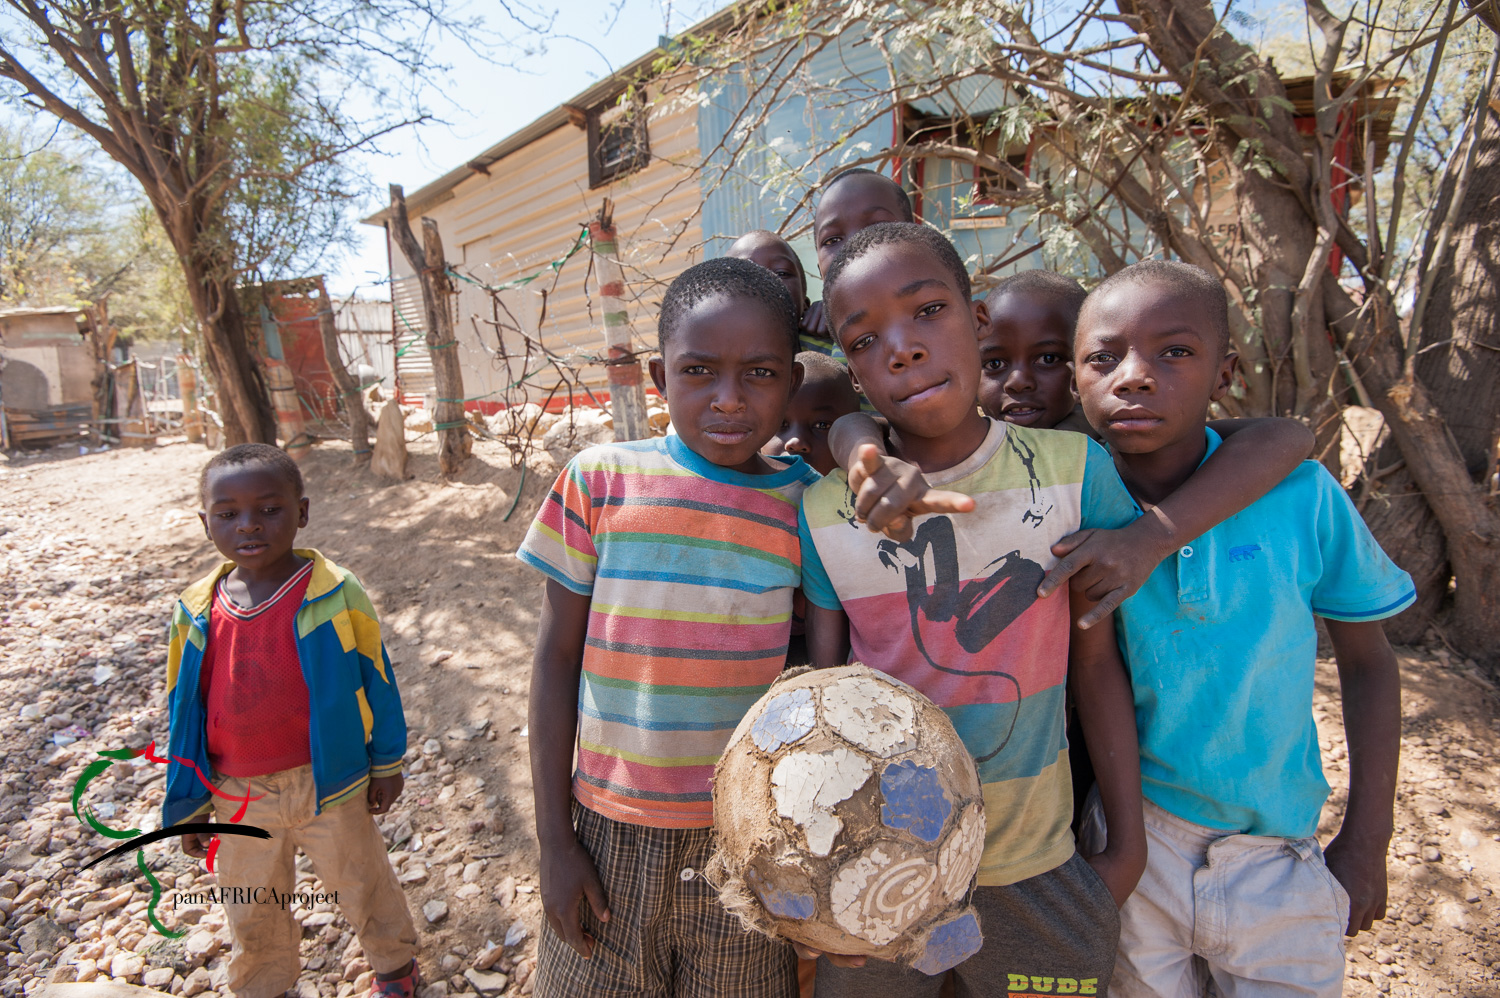 Portrait of children holding a soccer ball.